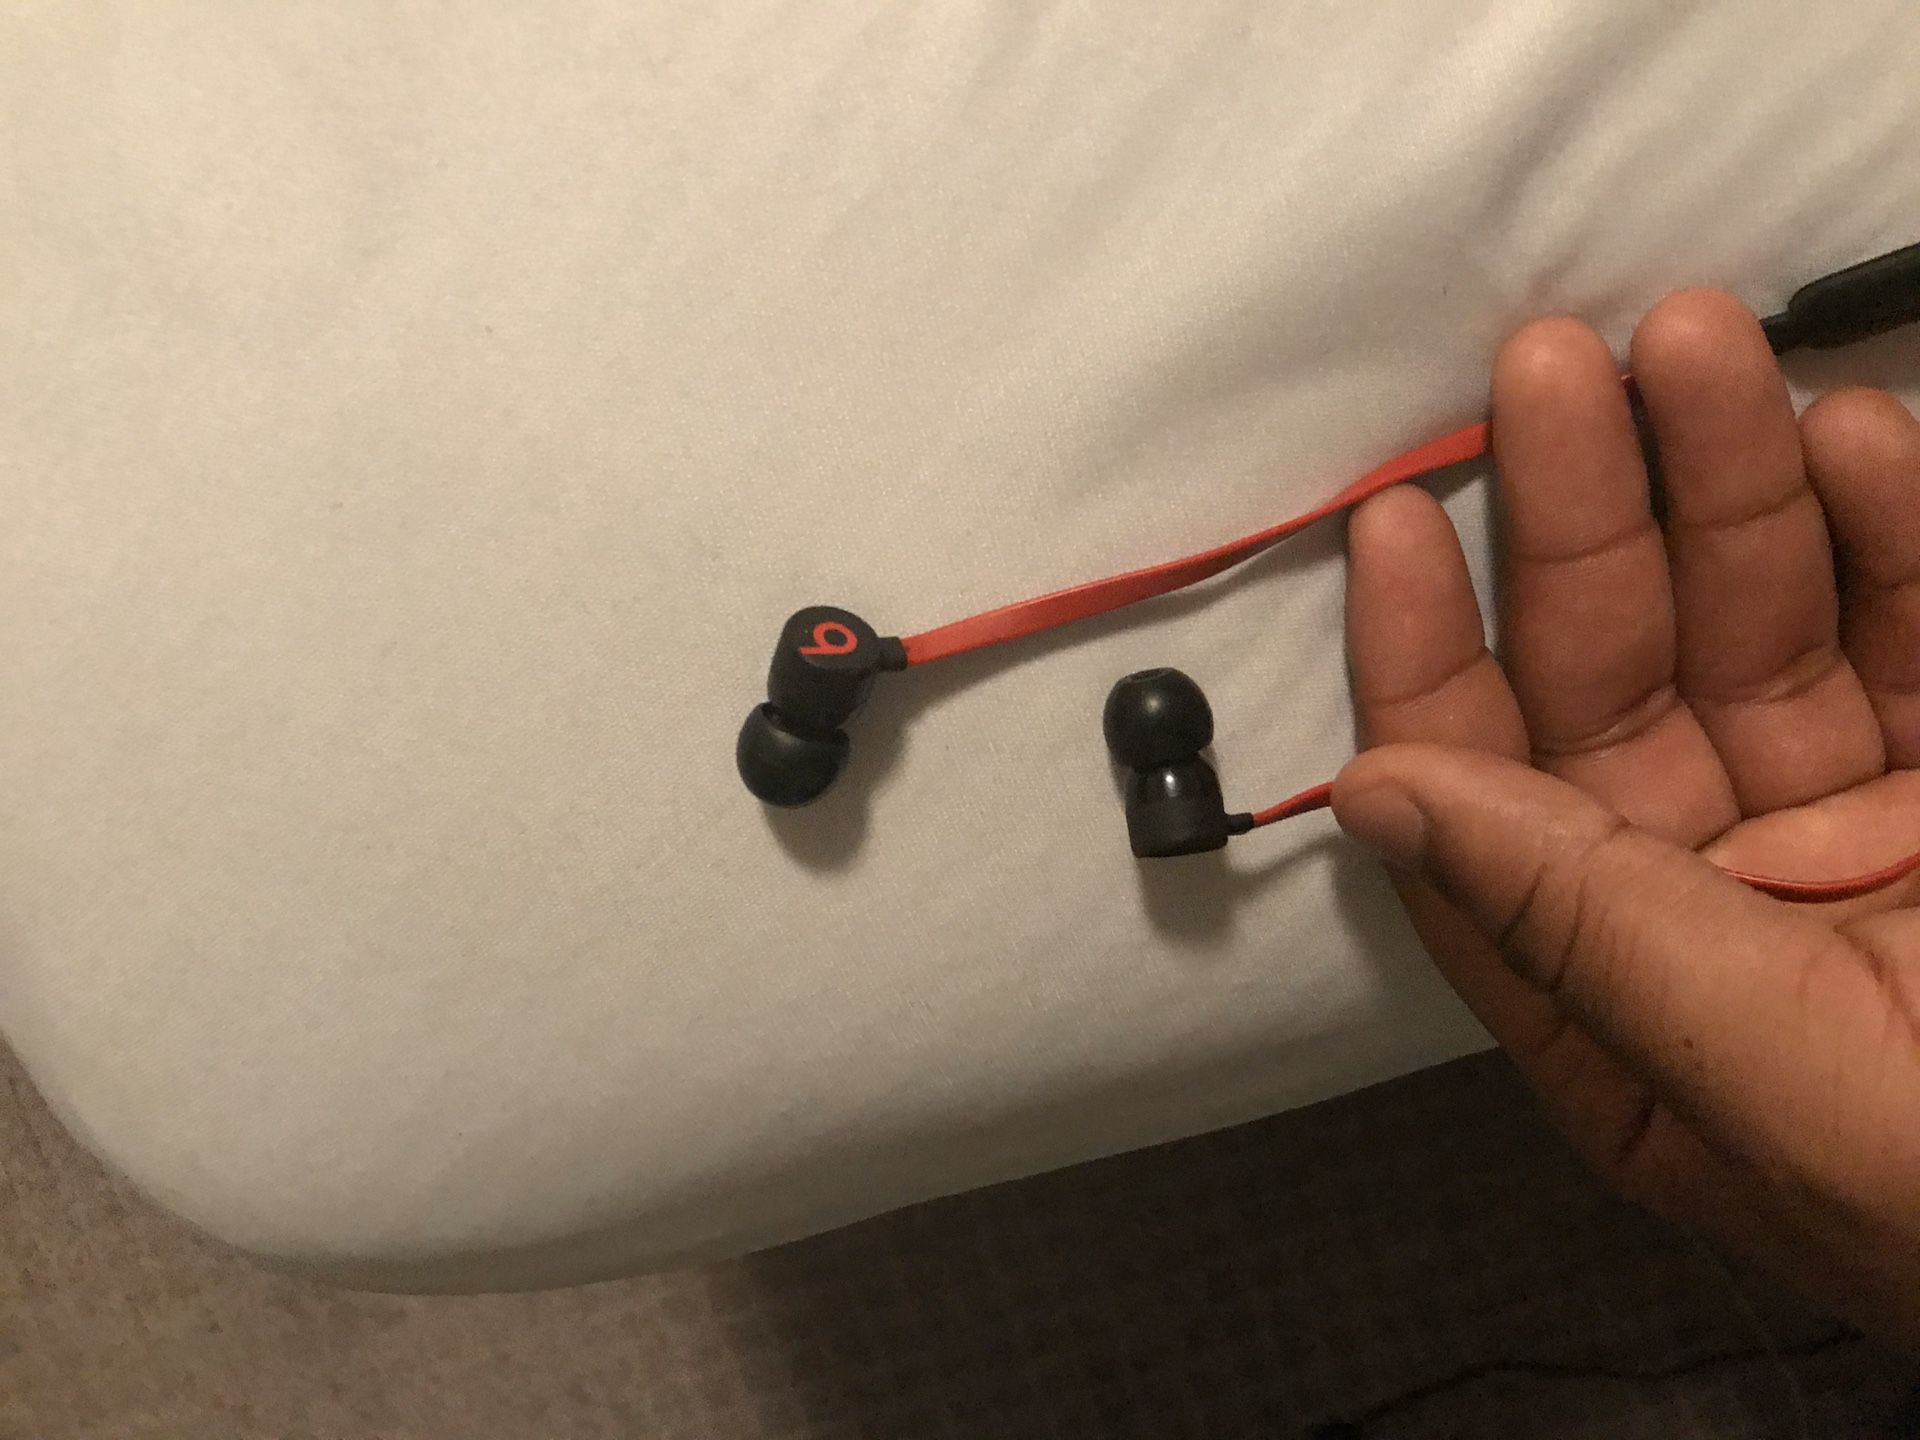 Bluetooth workout “beats” by Dre headphones